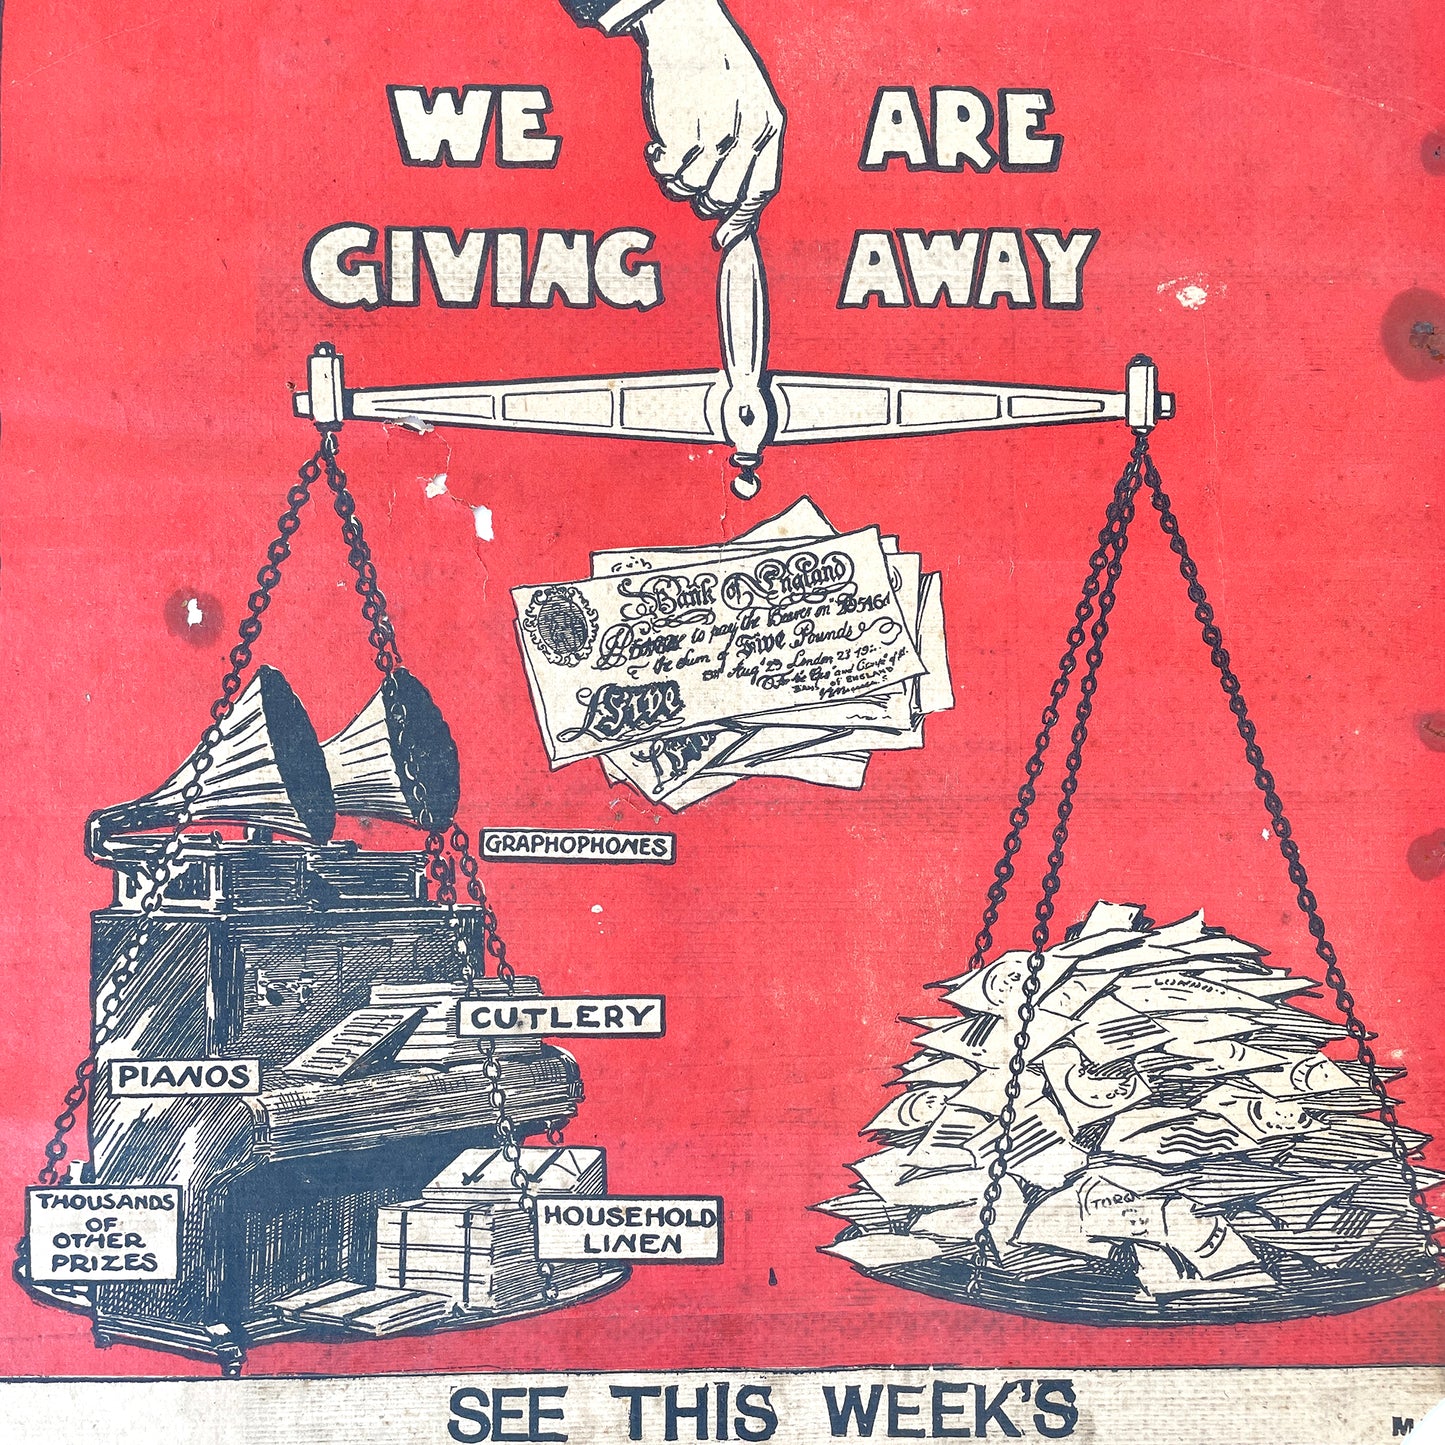 1913 Newspaper Headline Poster – ‘Prizes for Postmarks’ - Sukie